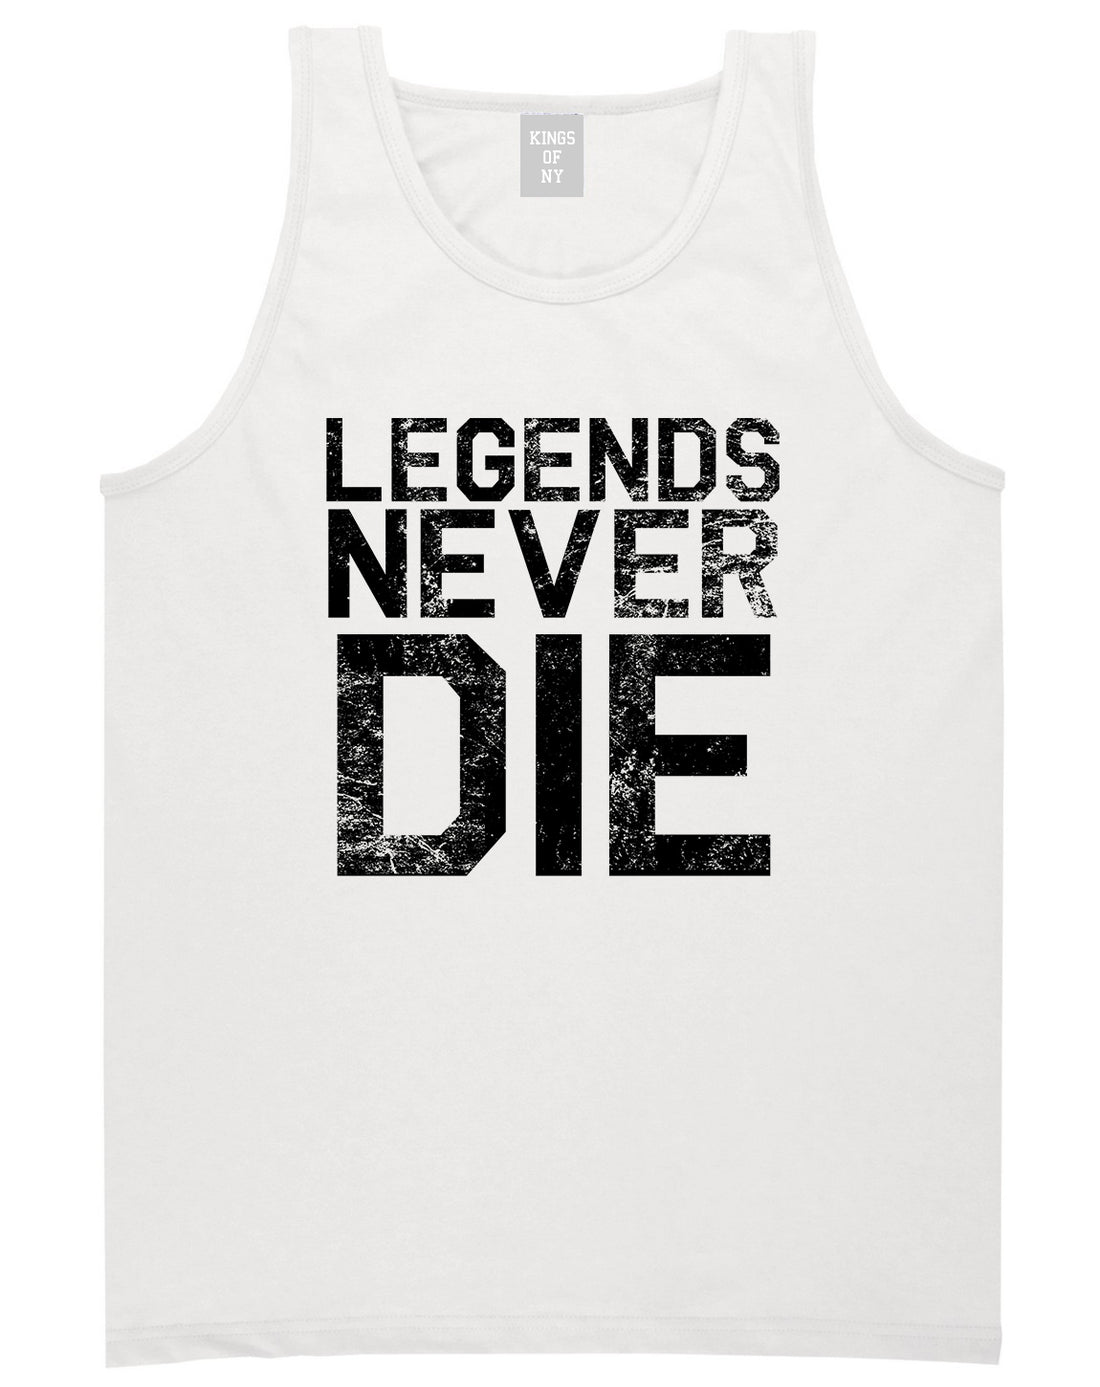 Legends Never Die Vintage Mens Tank Top T-Shirt White